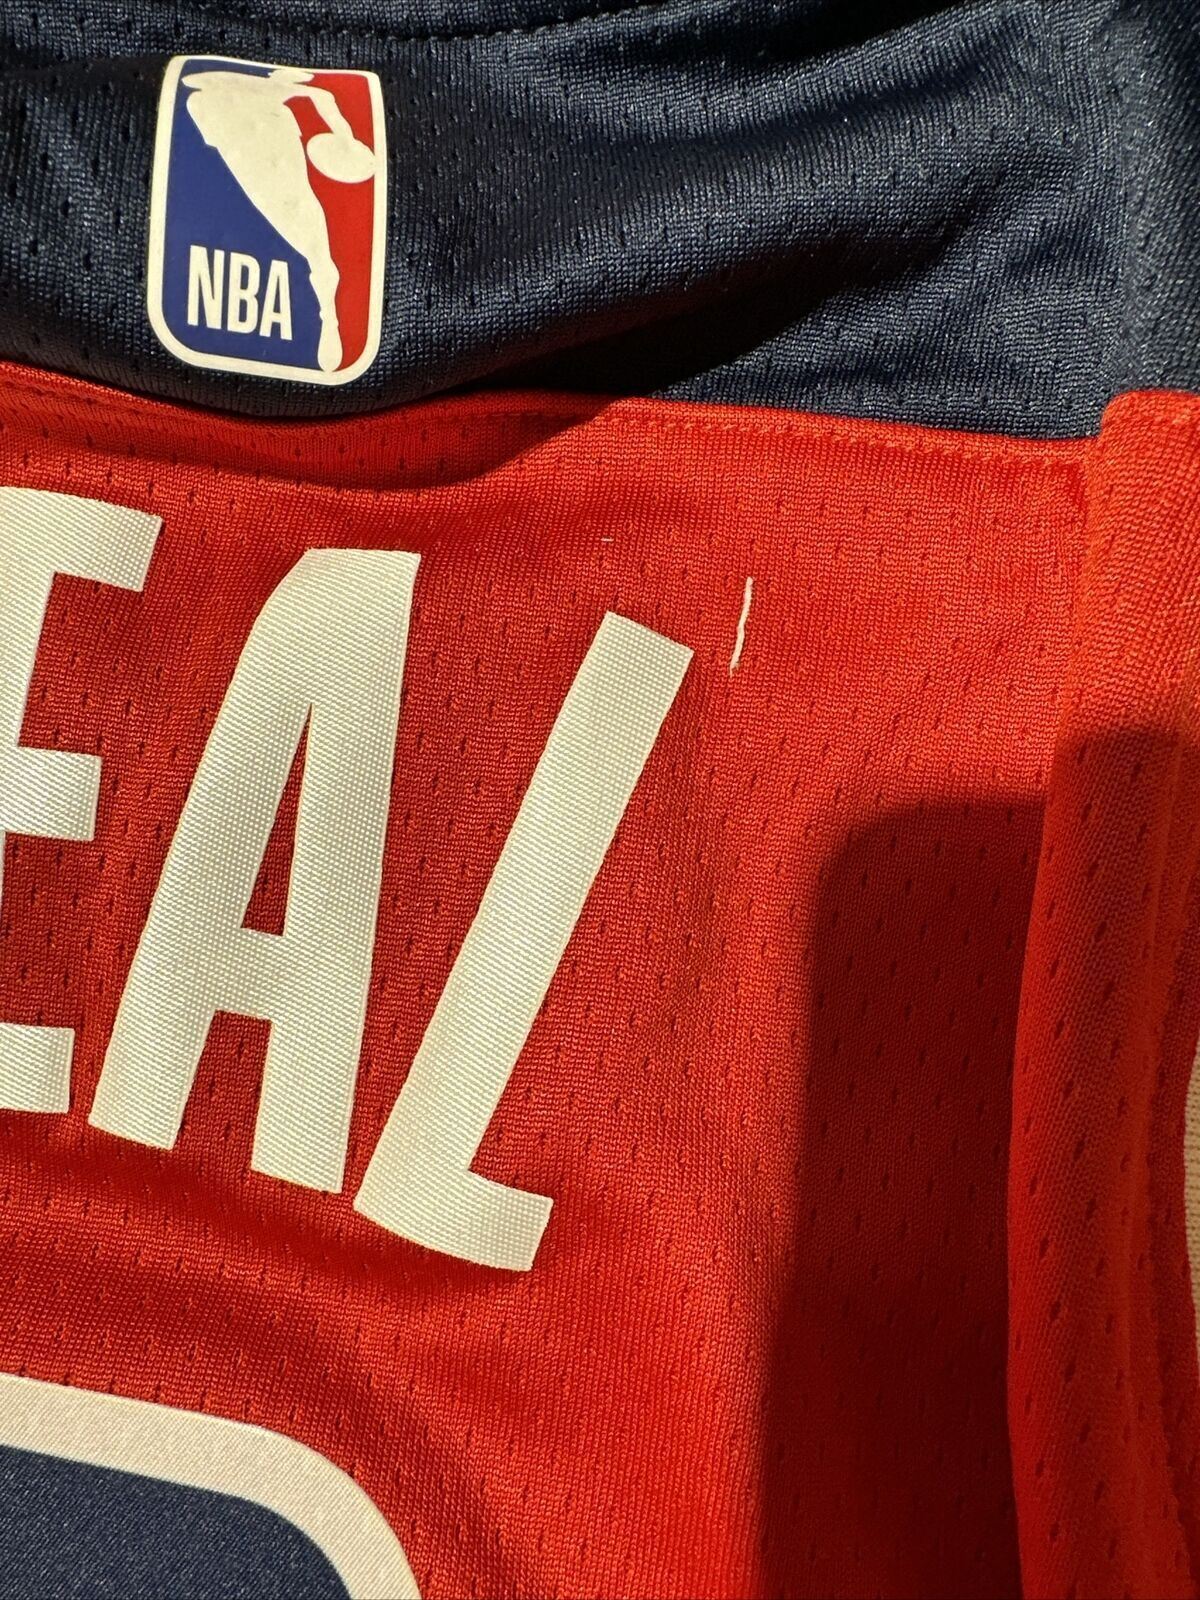 Nike NBA Washington Wizards Swingman Jersey BEAL 3 Basketball Mens Medium.